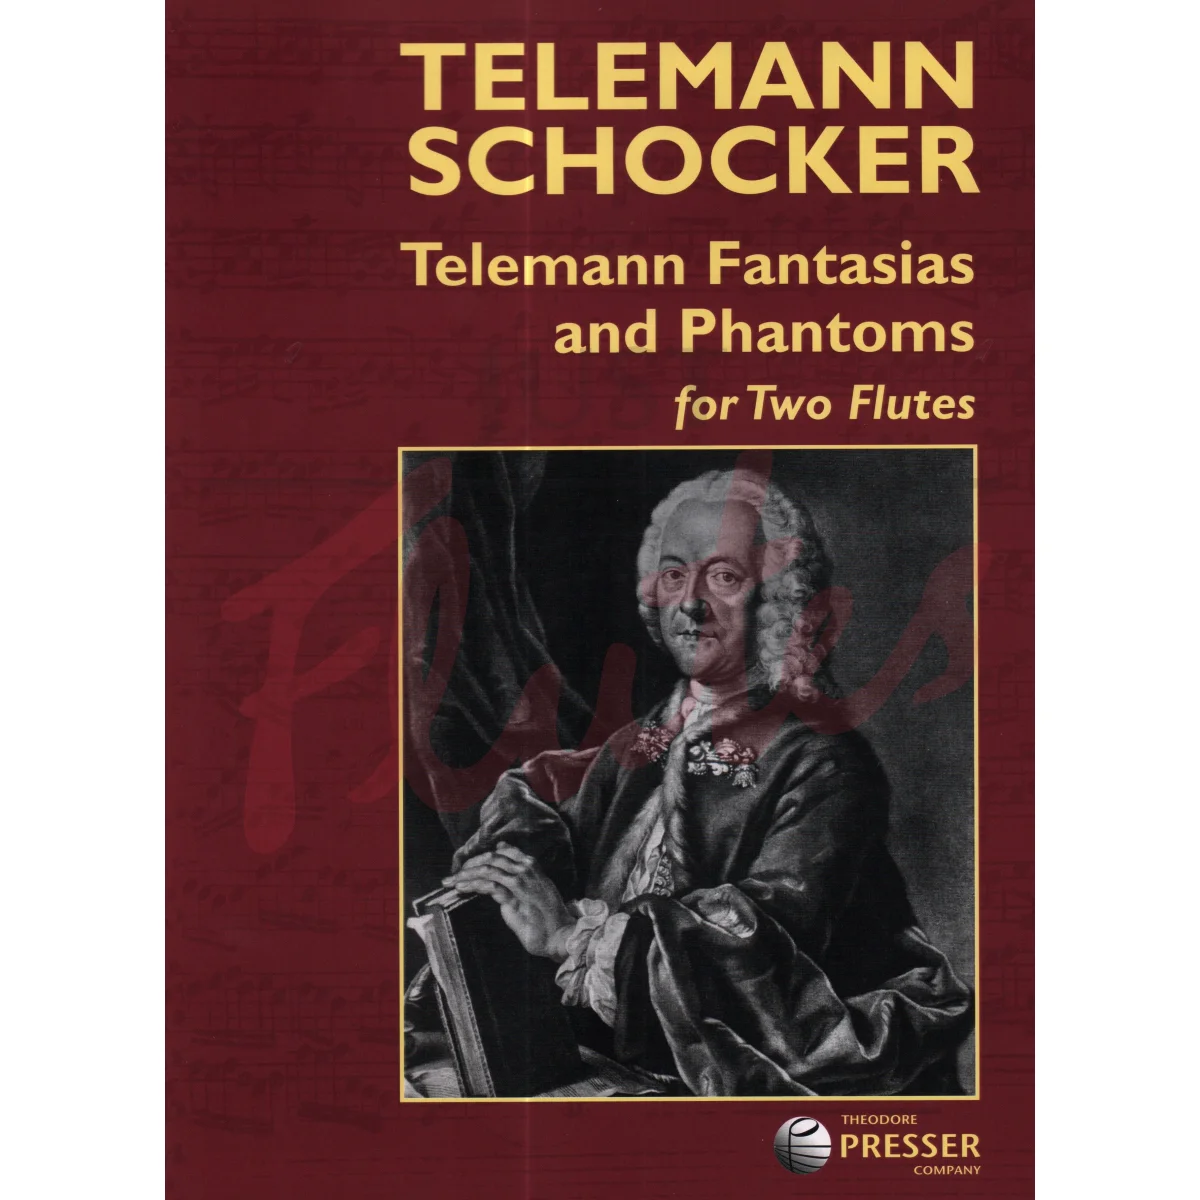 Telemann Fantasias and Phantoms for Two Flutes